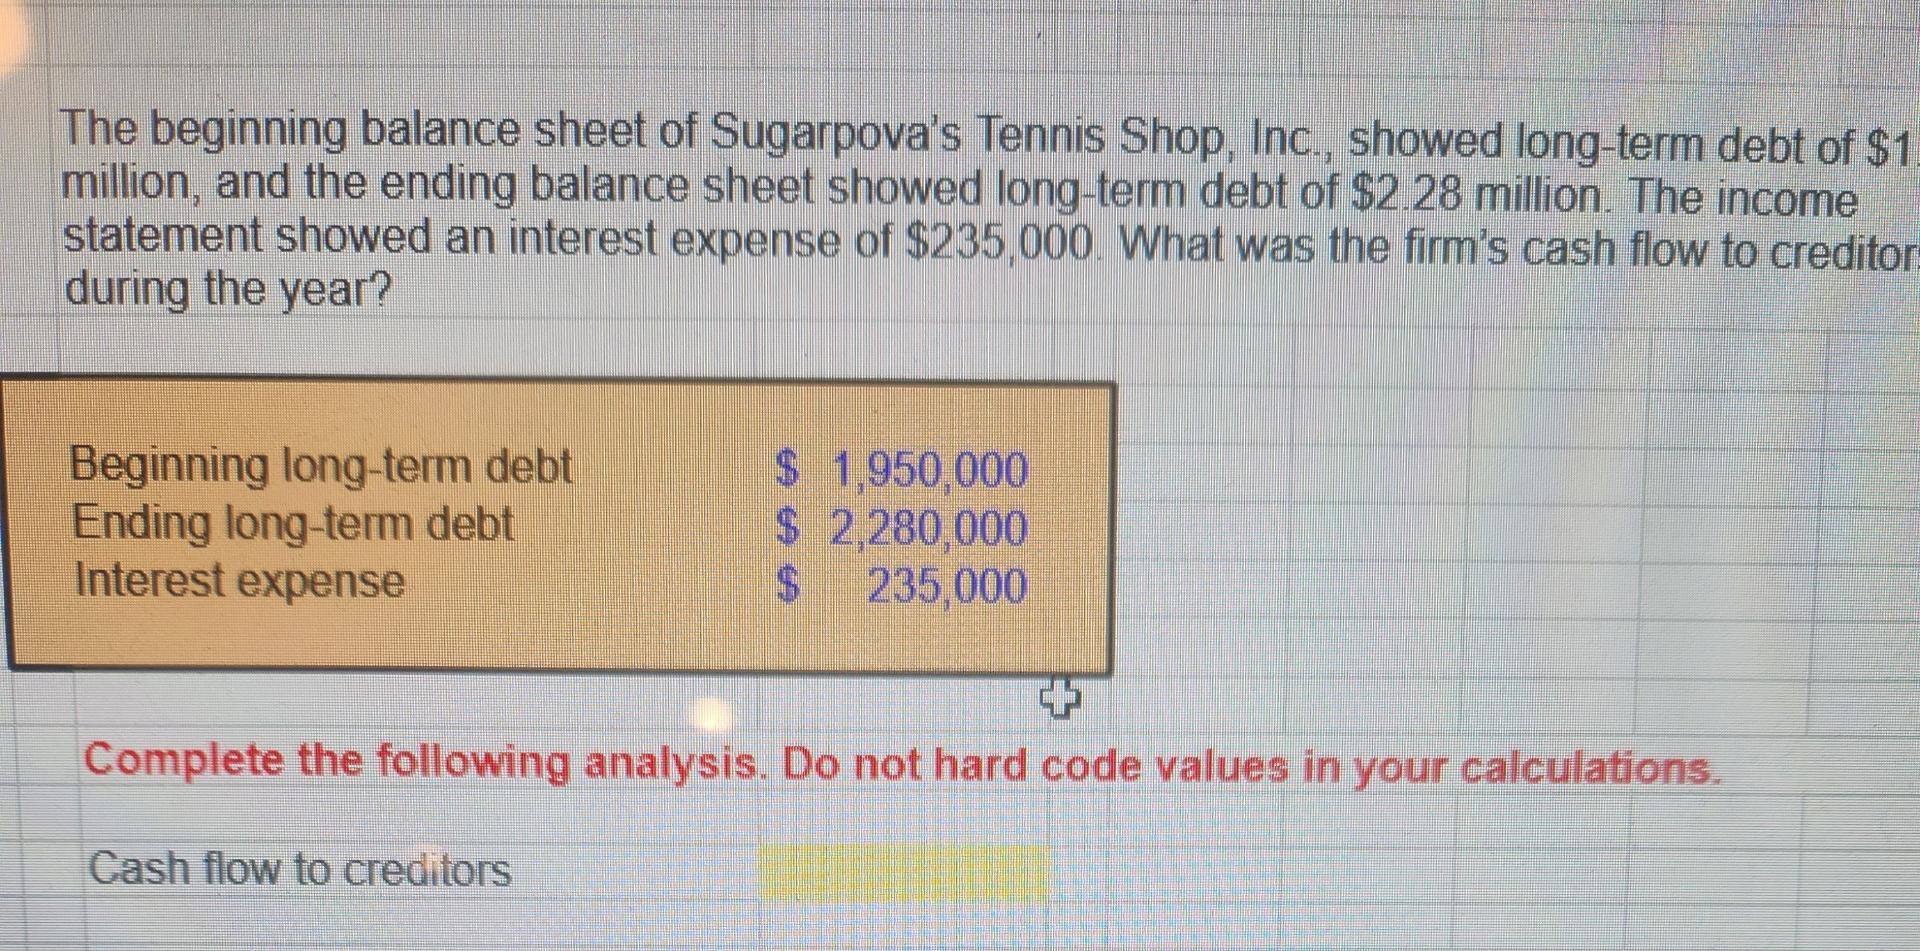 The beginning balance sheet of Sugarpova's Tennis Shop, Inc., showed long-term debt of $1 million, and the